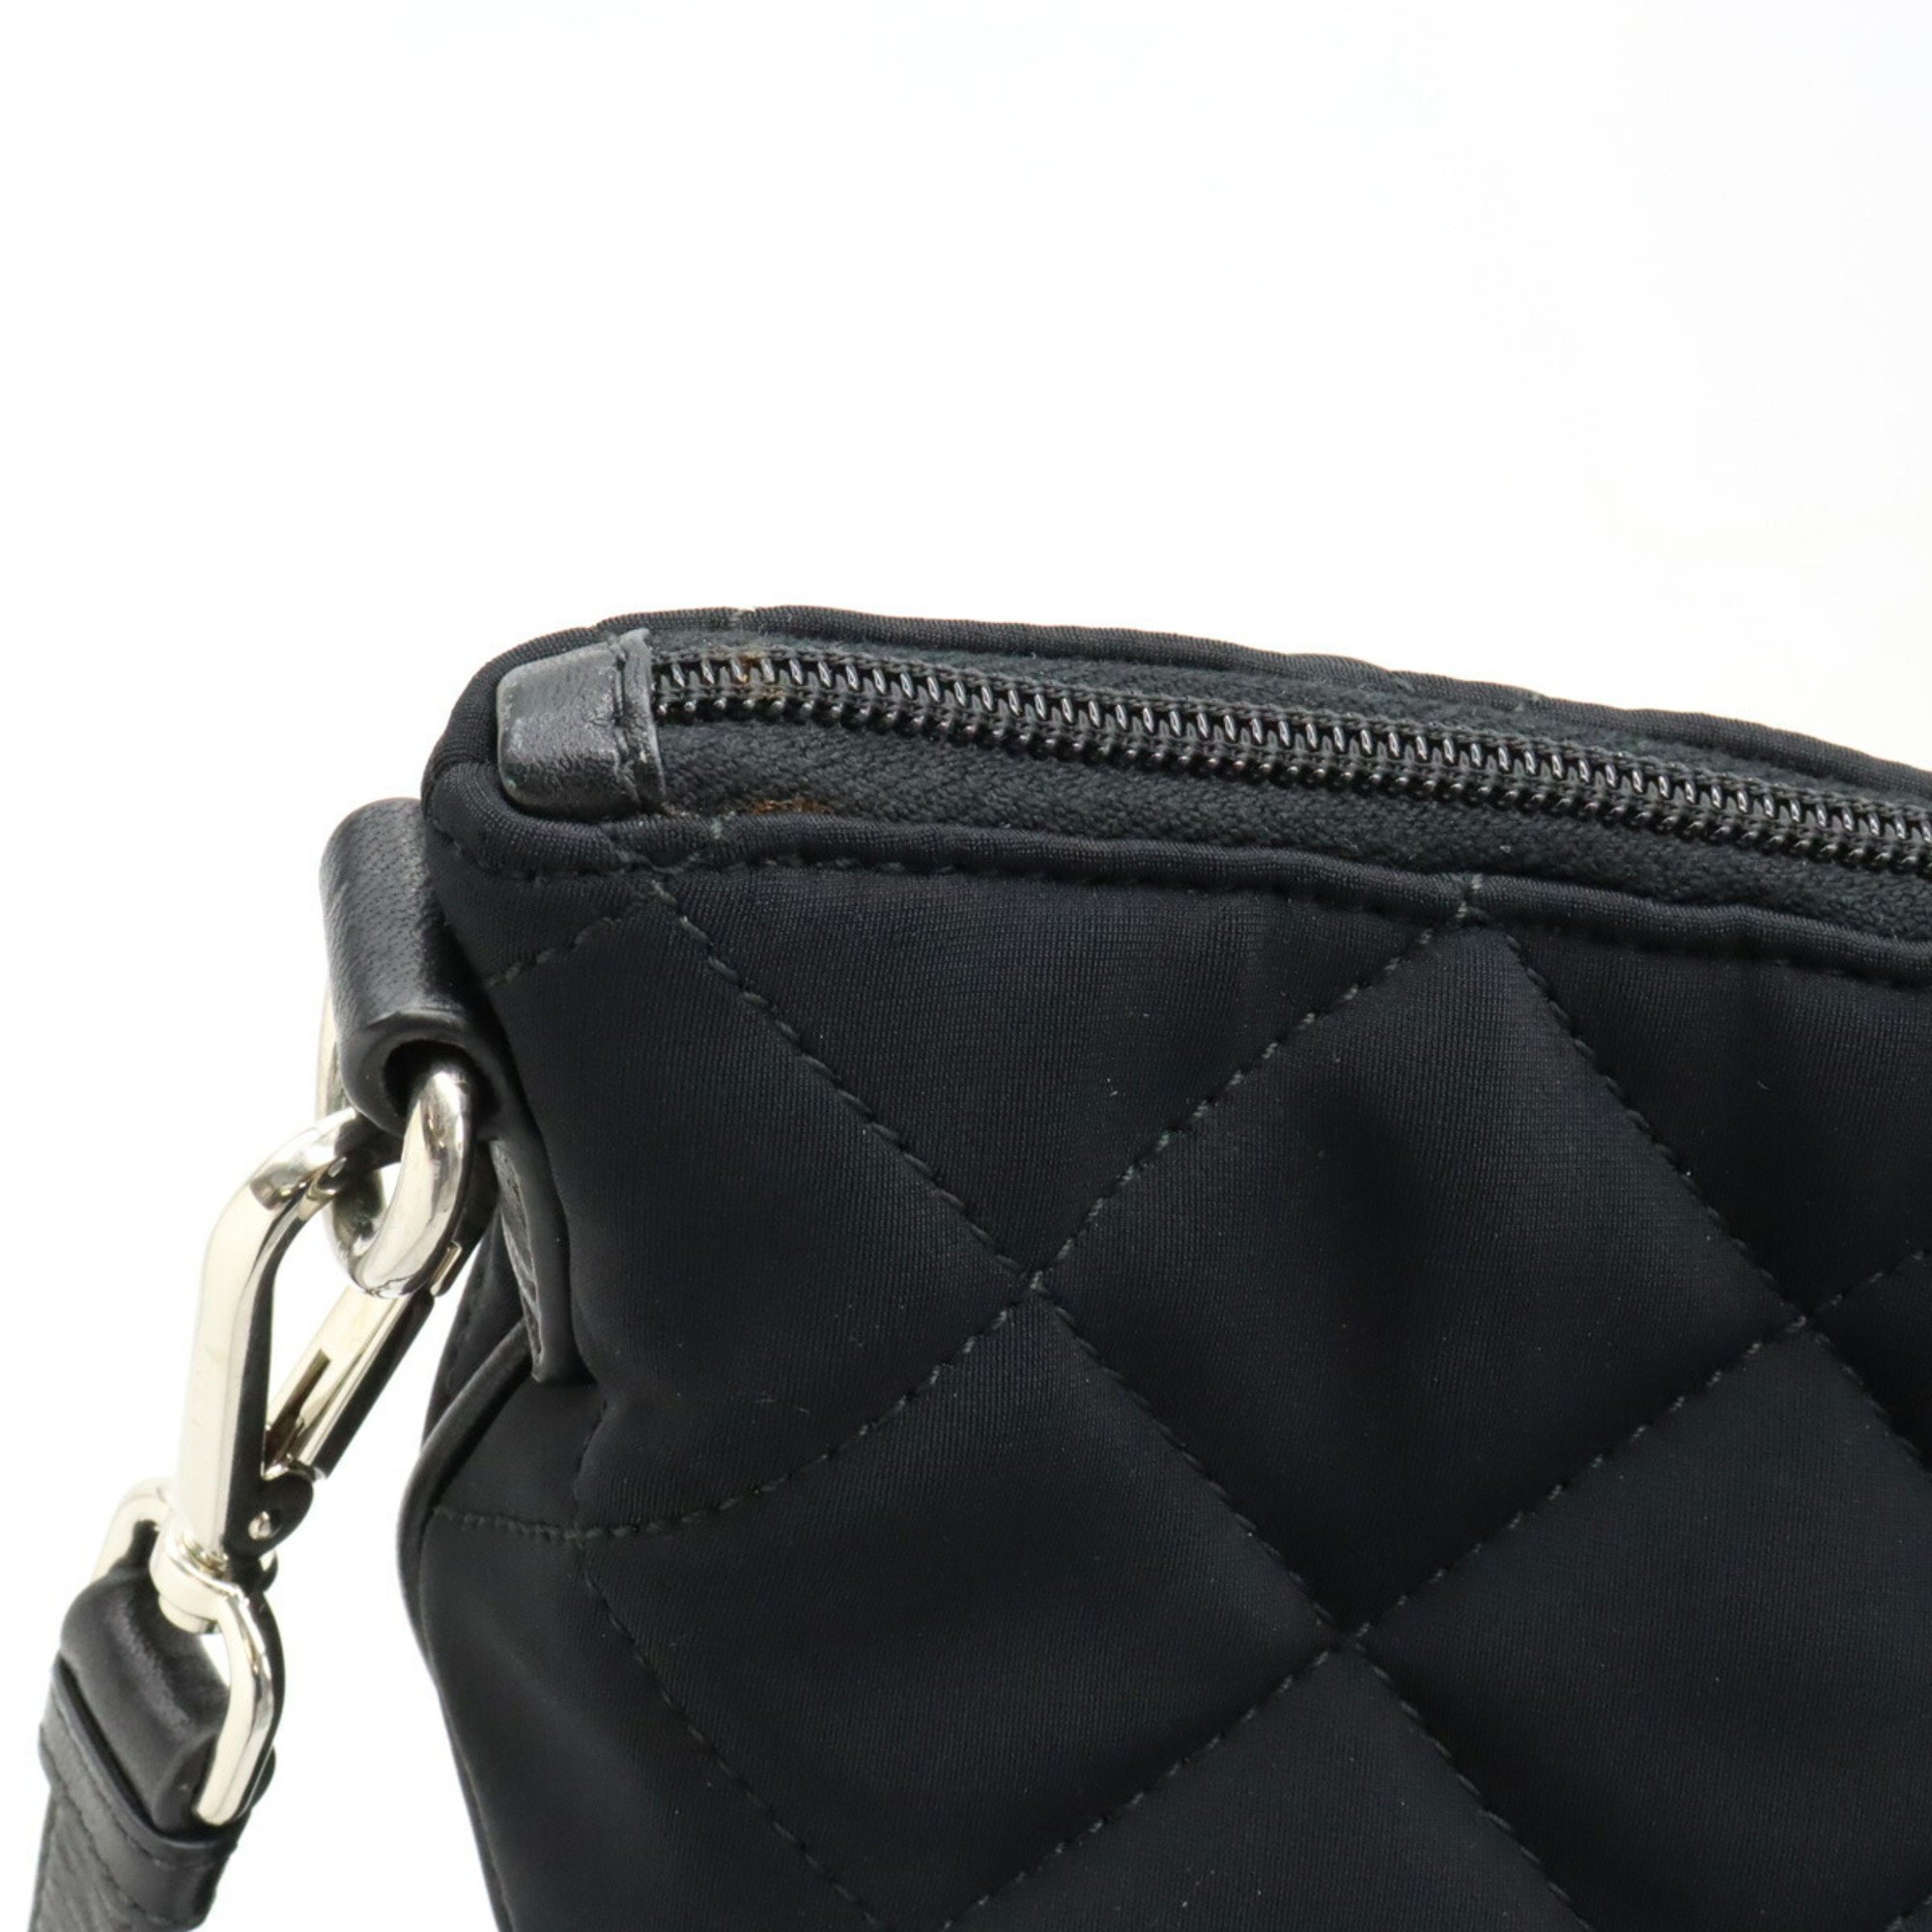 PRADA Prada Quilted Tote Bag Shoulder Nylon Leather NERO Black Purchased at Japan Outlet BN2149